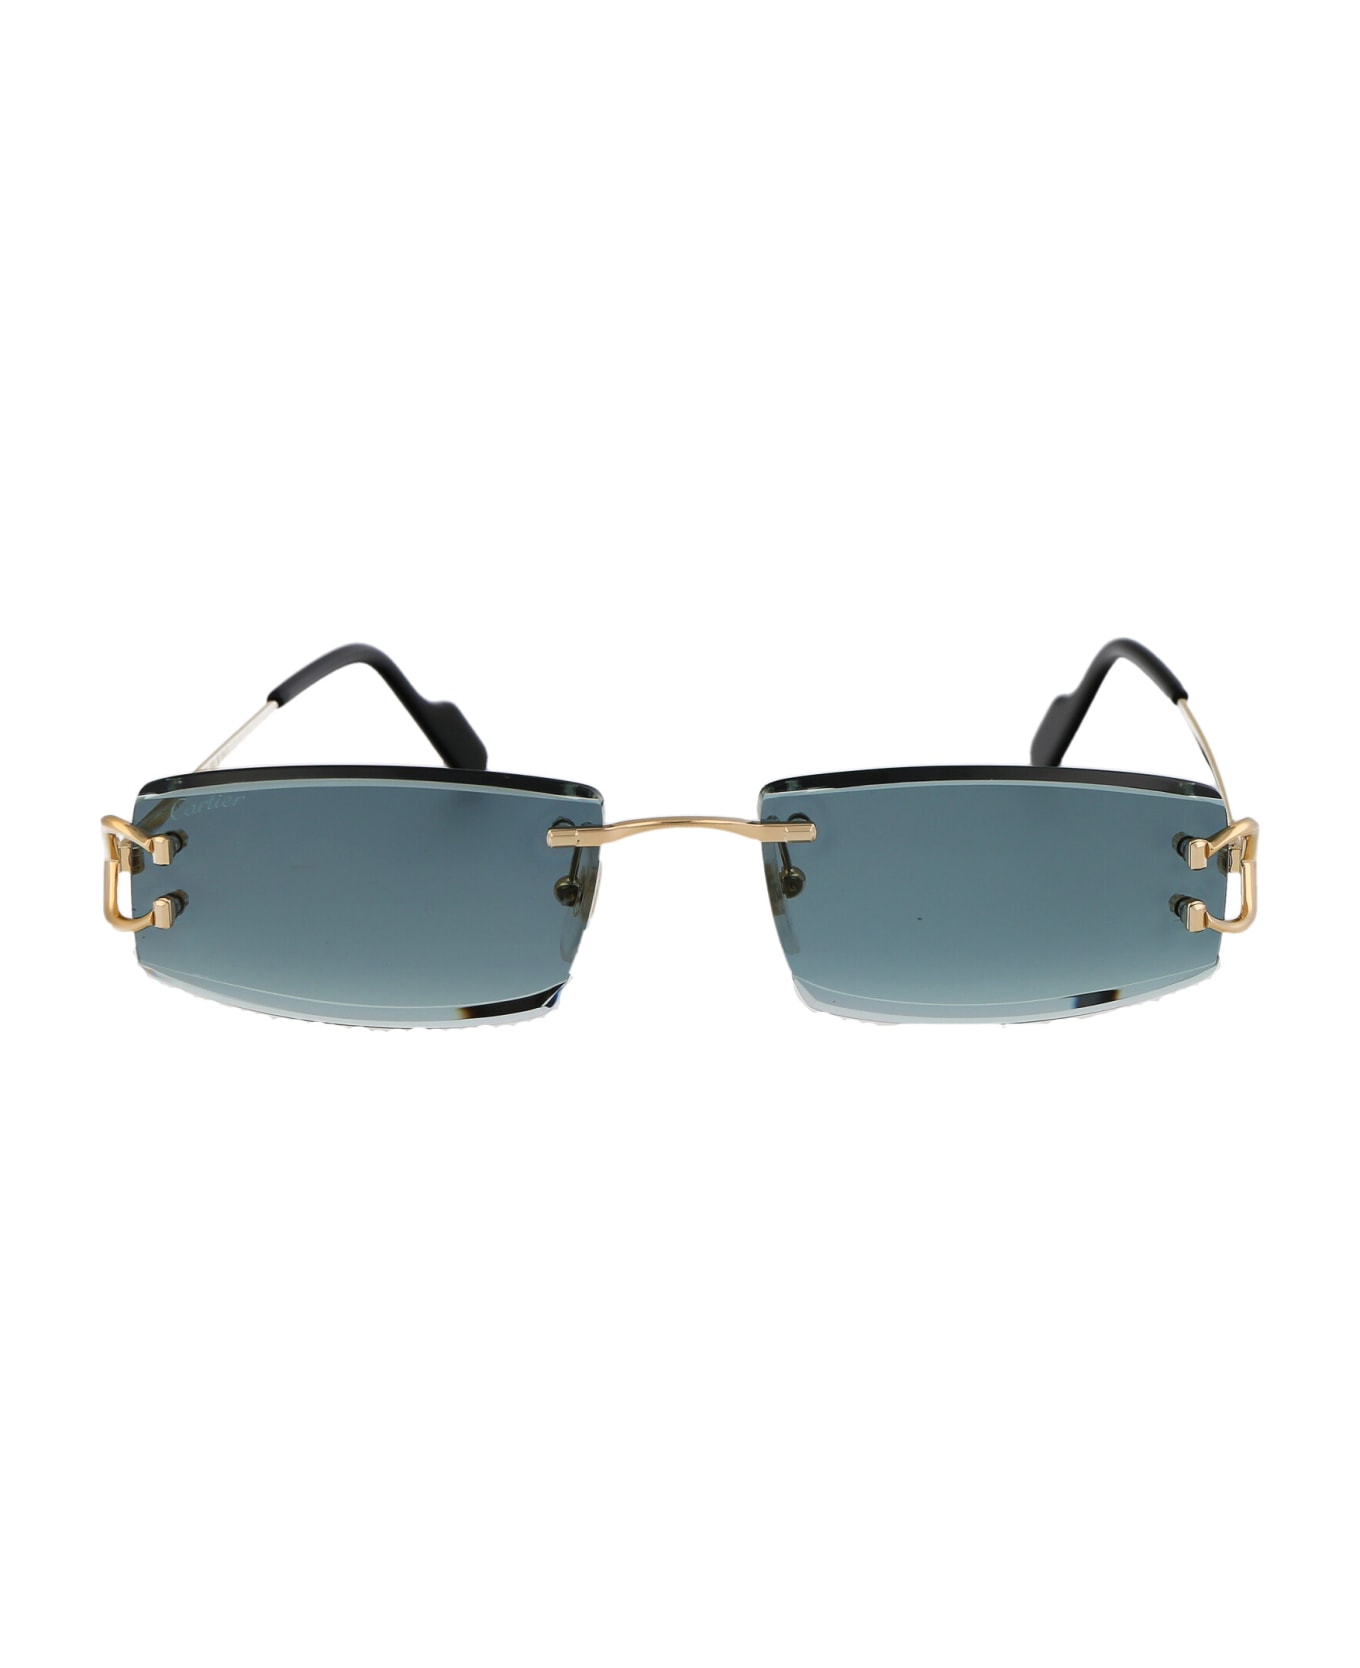 Cartier Eyewear Ct0465s Sunglasses - 003 GOLD GOLD GREEN サングラス